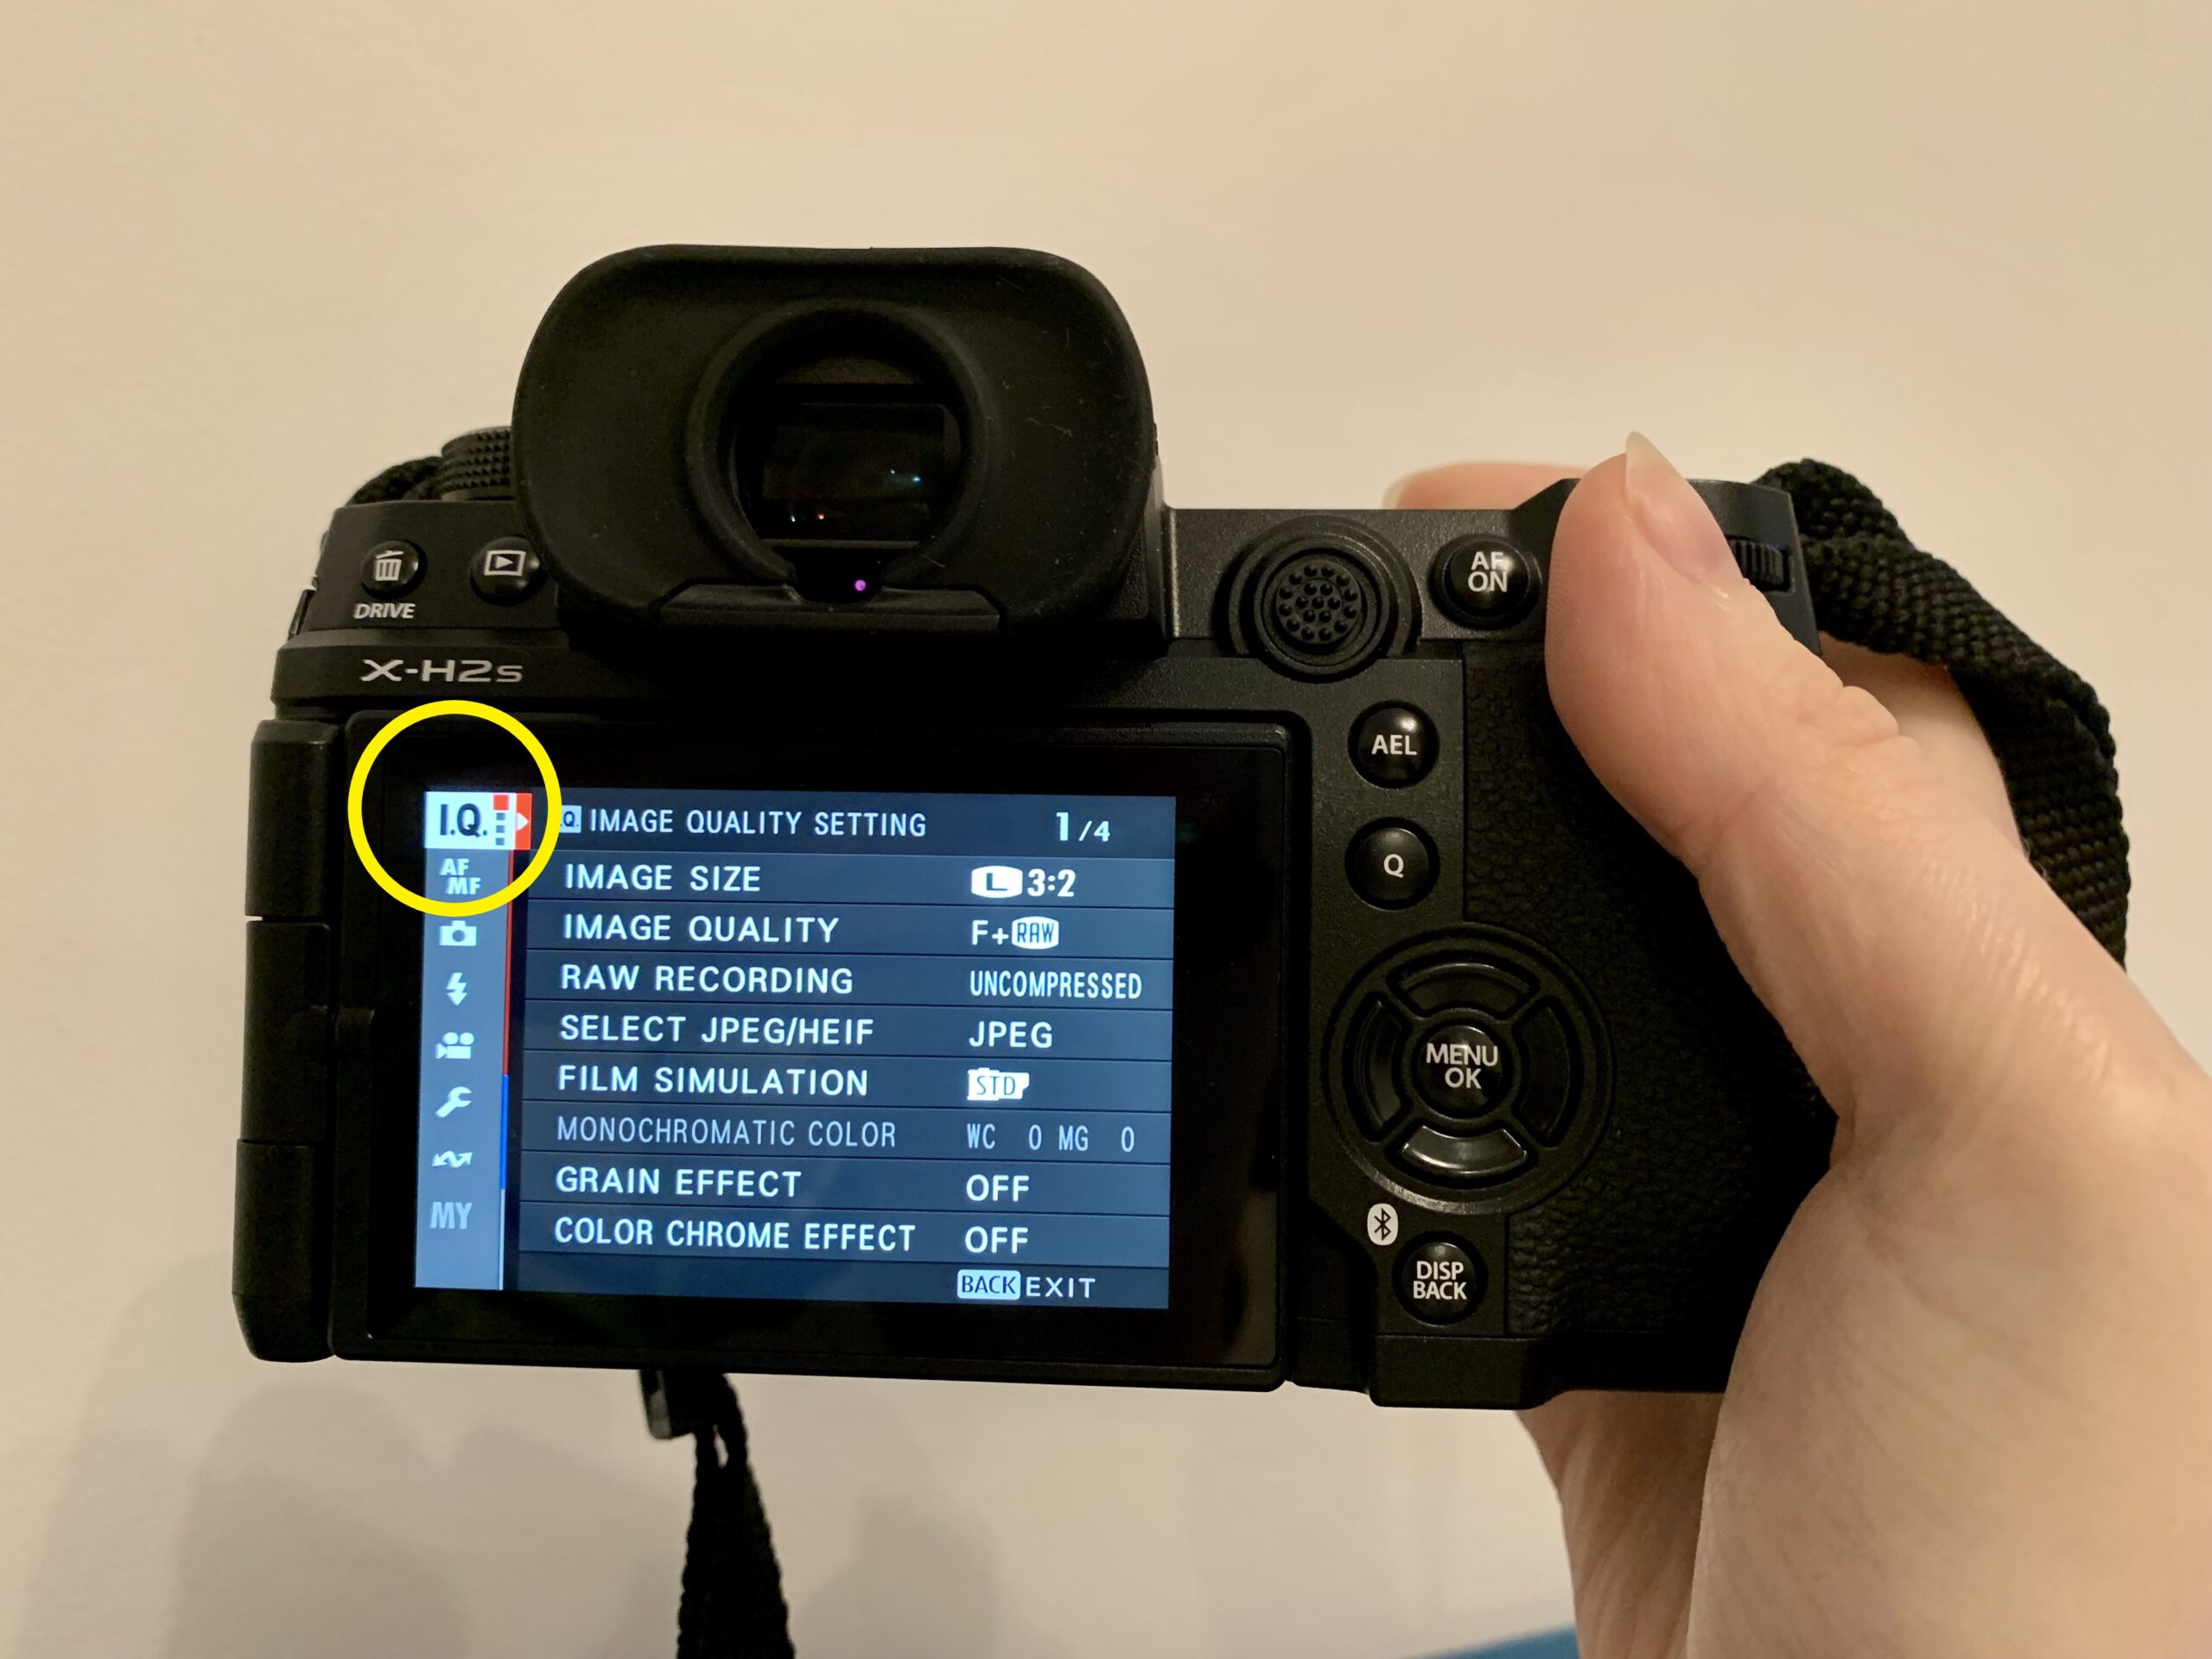 How to change film simulation on a Fujifilm camera